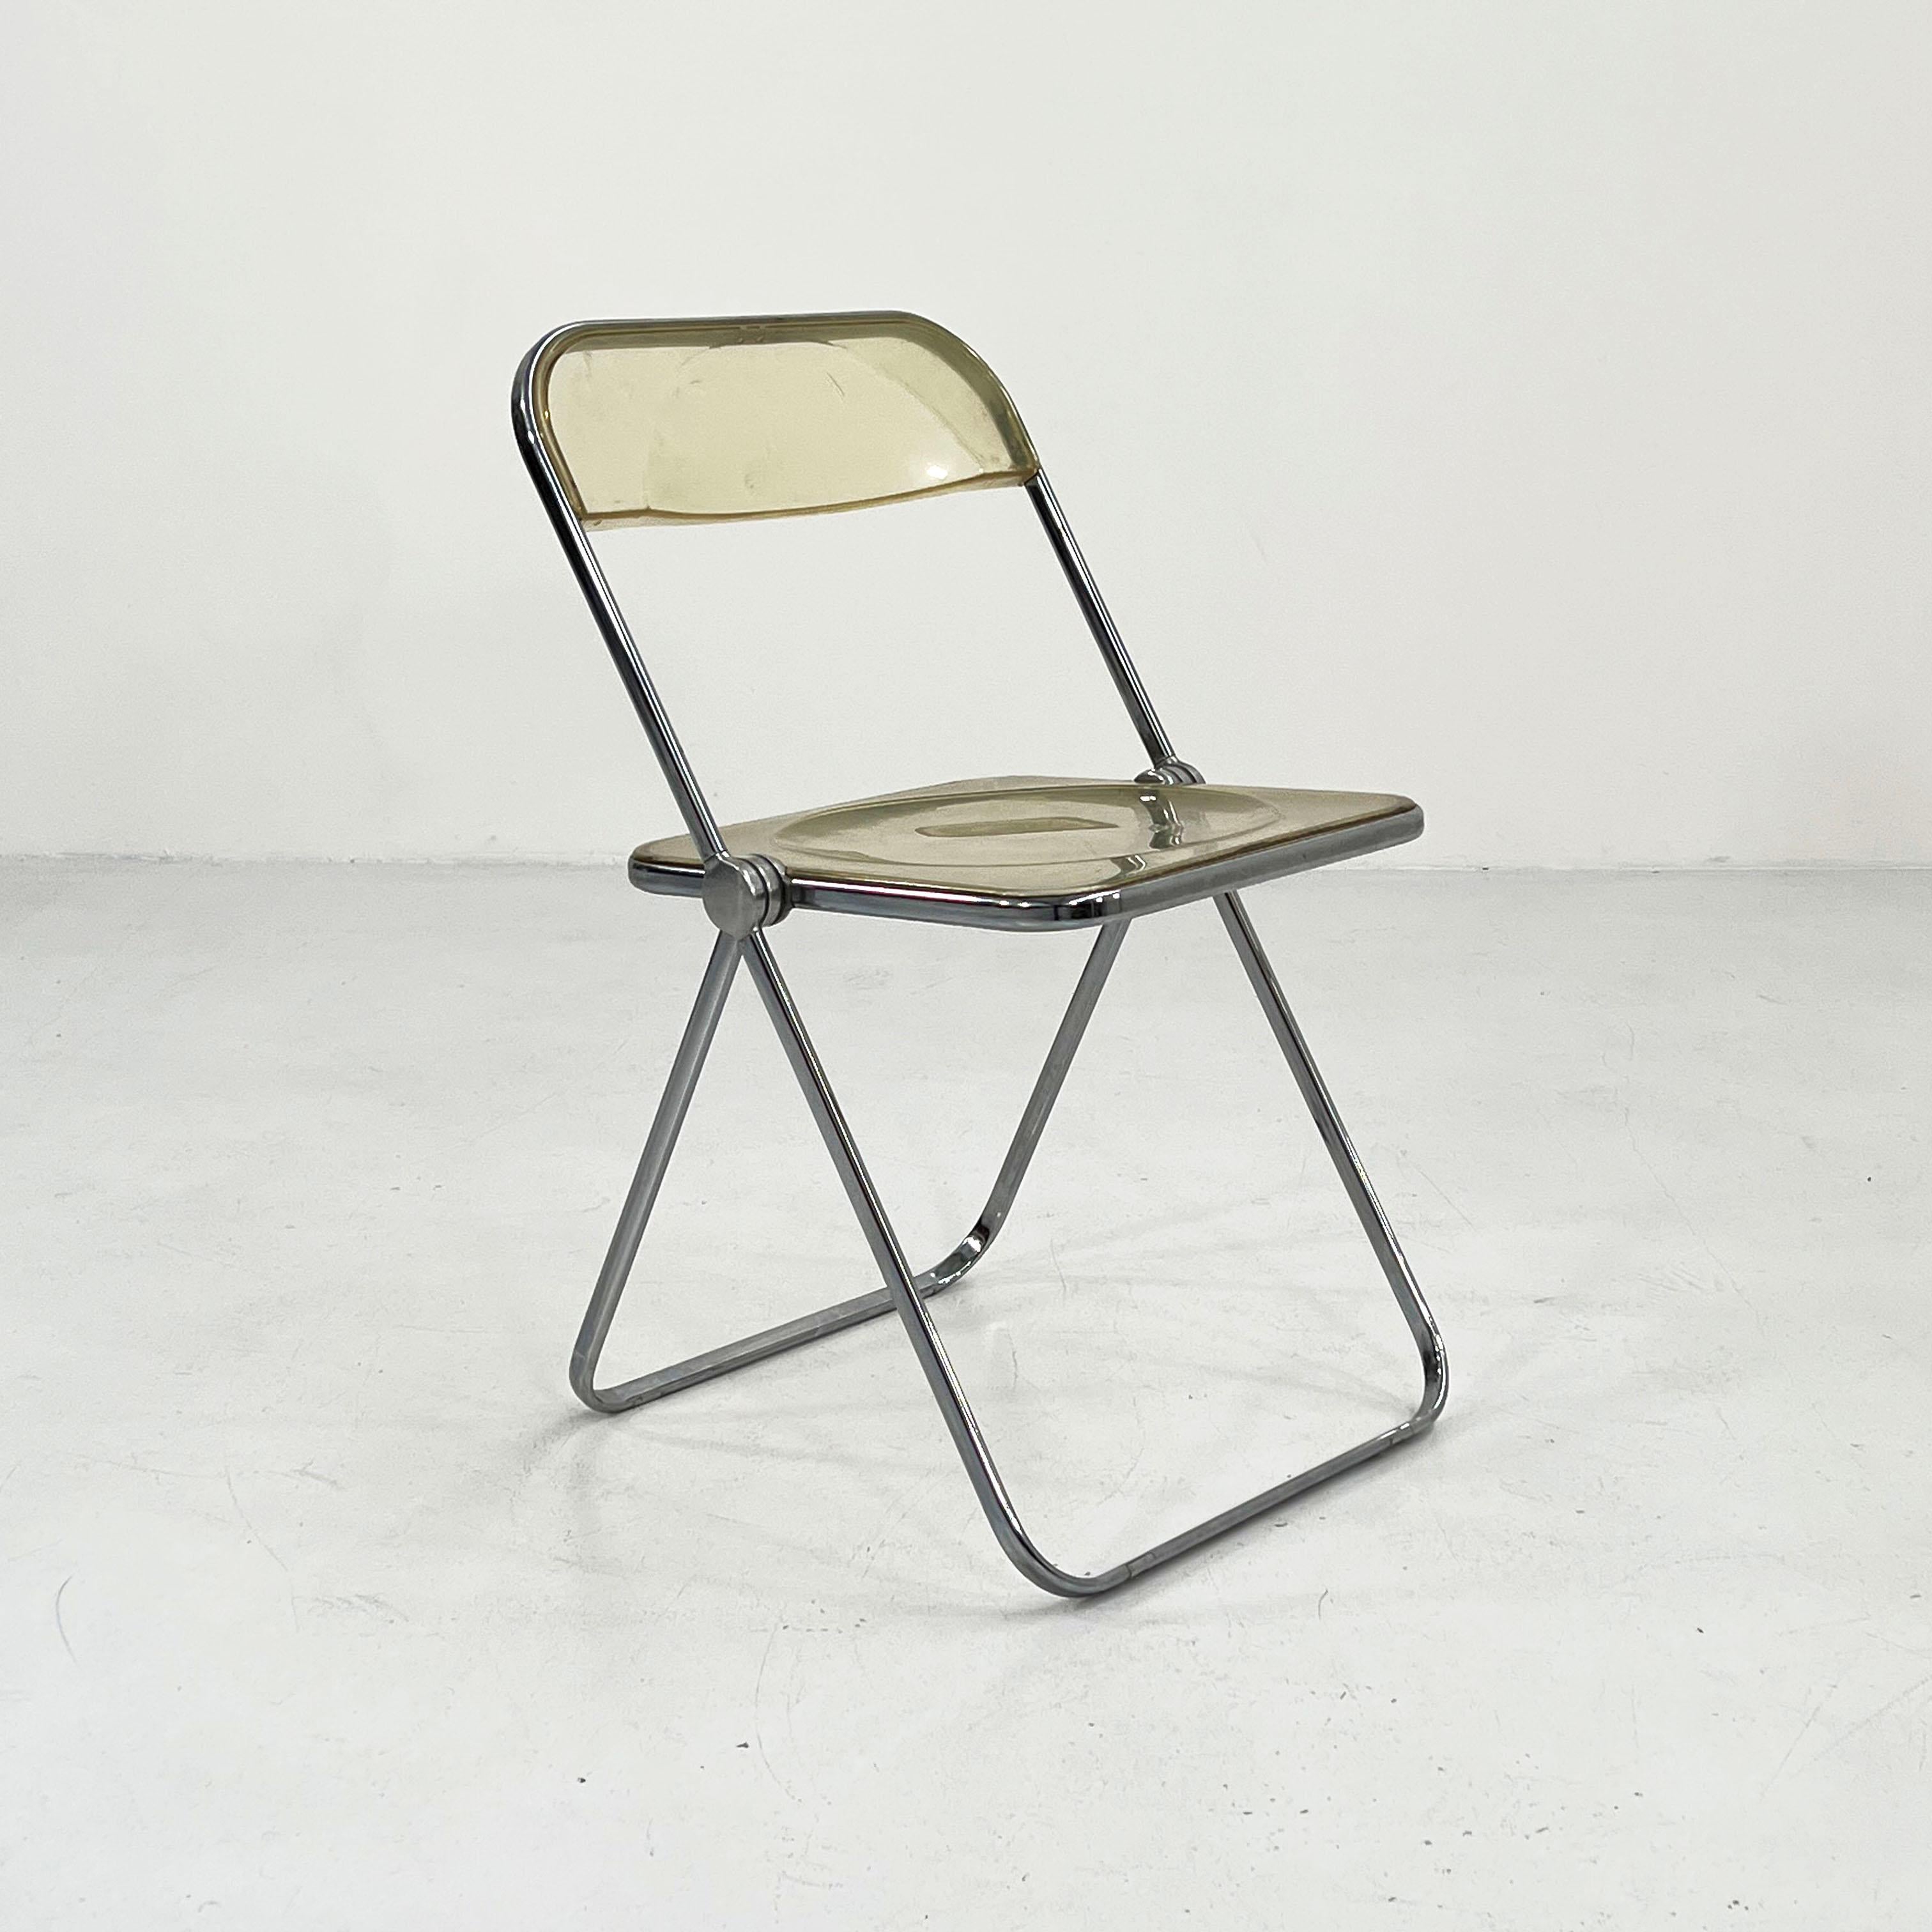 Designer - Giancarlo Piretti
Producer - Anonima Castelli
Model - Plia Chair
Design Period - Sixties
Measurements - width 46 cm x depth 50 cm x height 75 cm x seat height 44 cm
Materials - Metal, Plastic
Color - Silver, Clear

Condition -